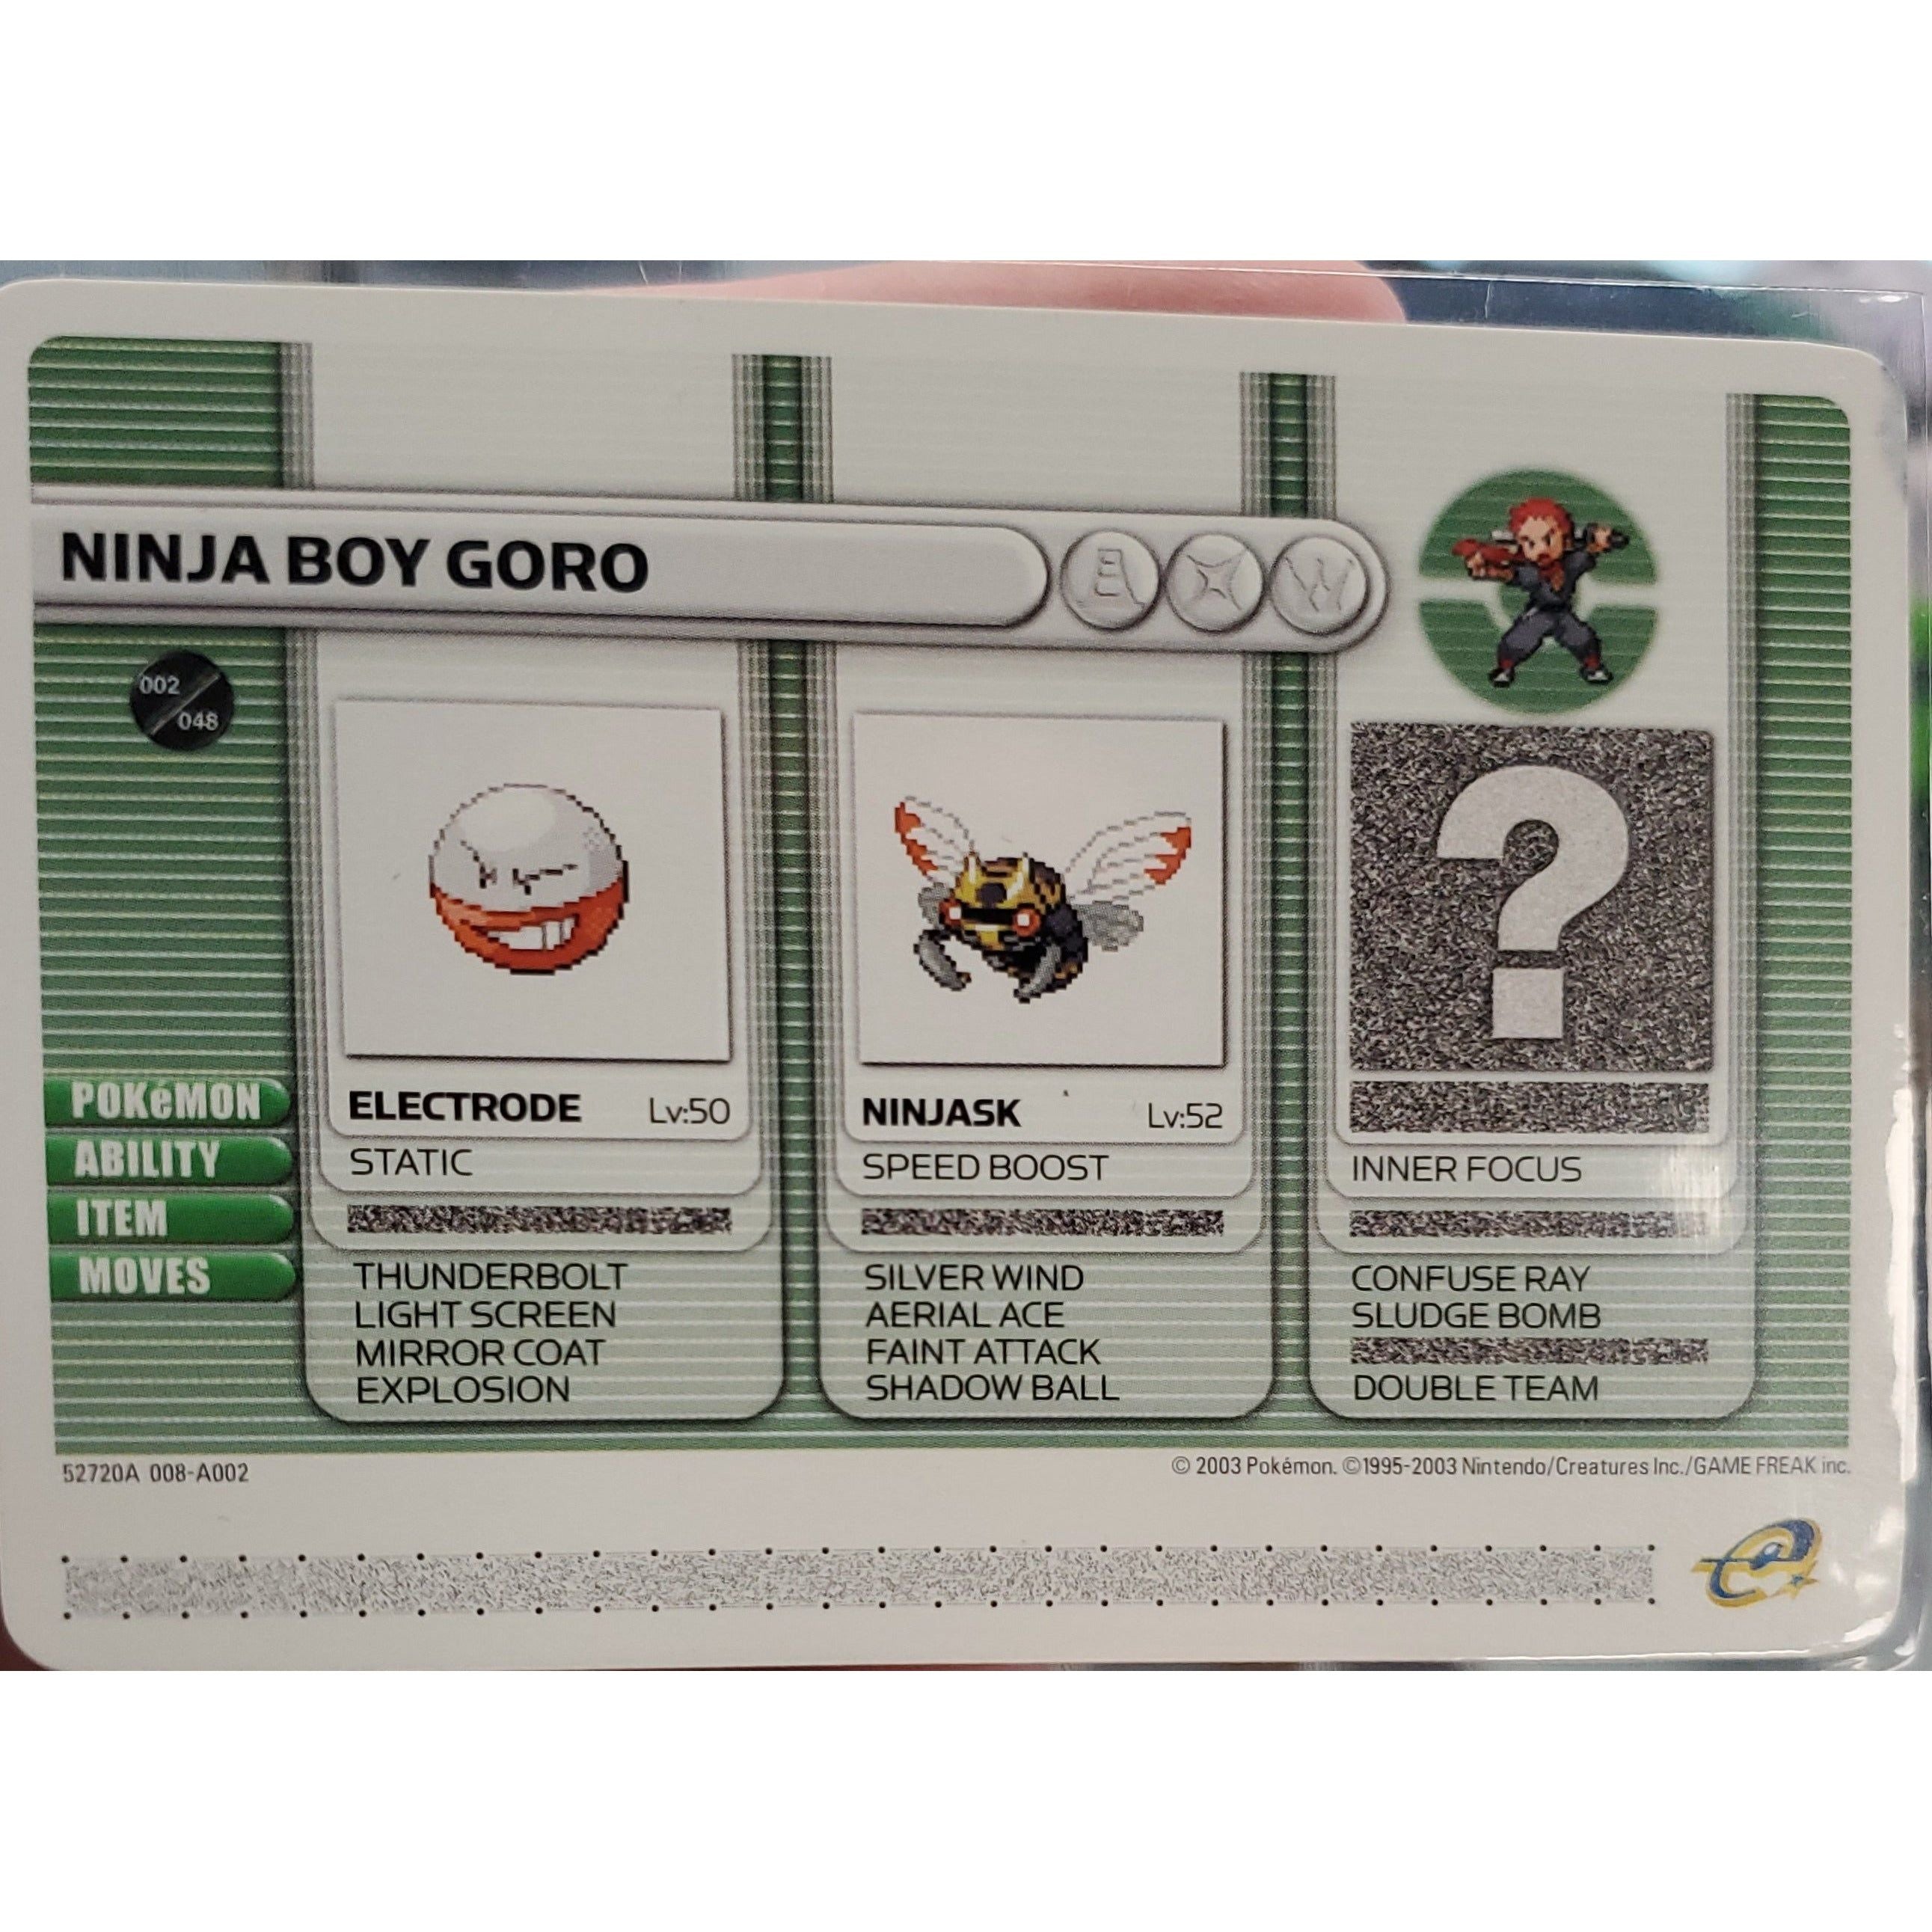 GBA - Pokemon Battle Card - Ninja Boy Goro